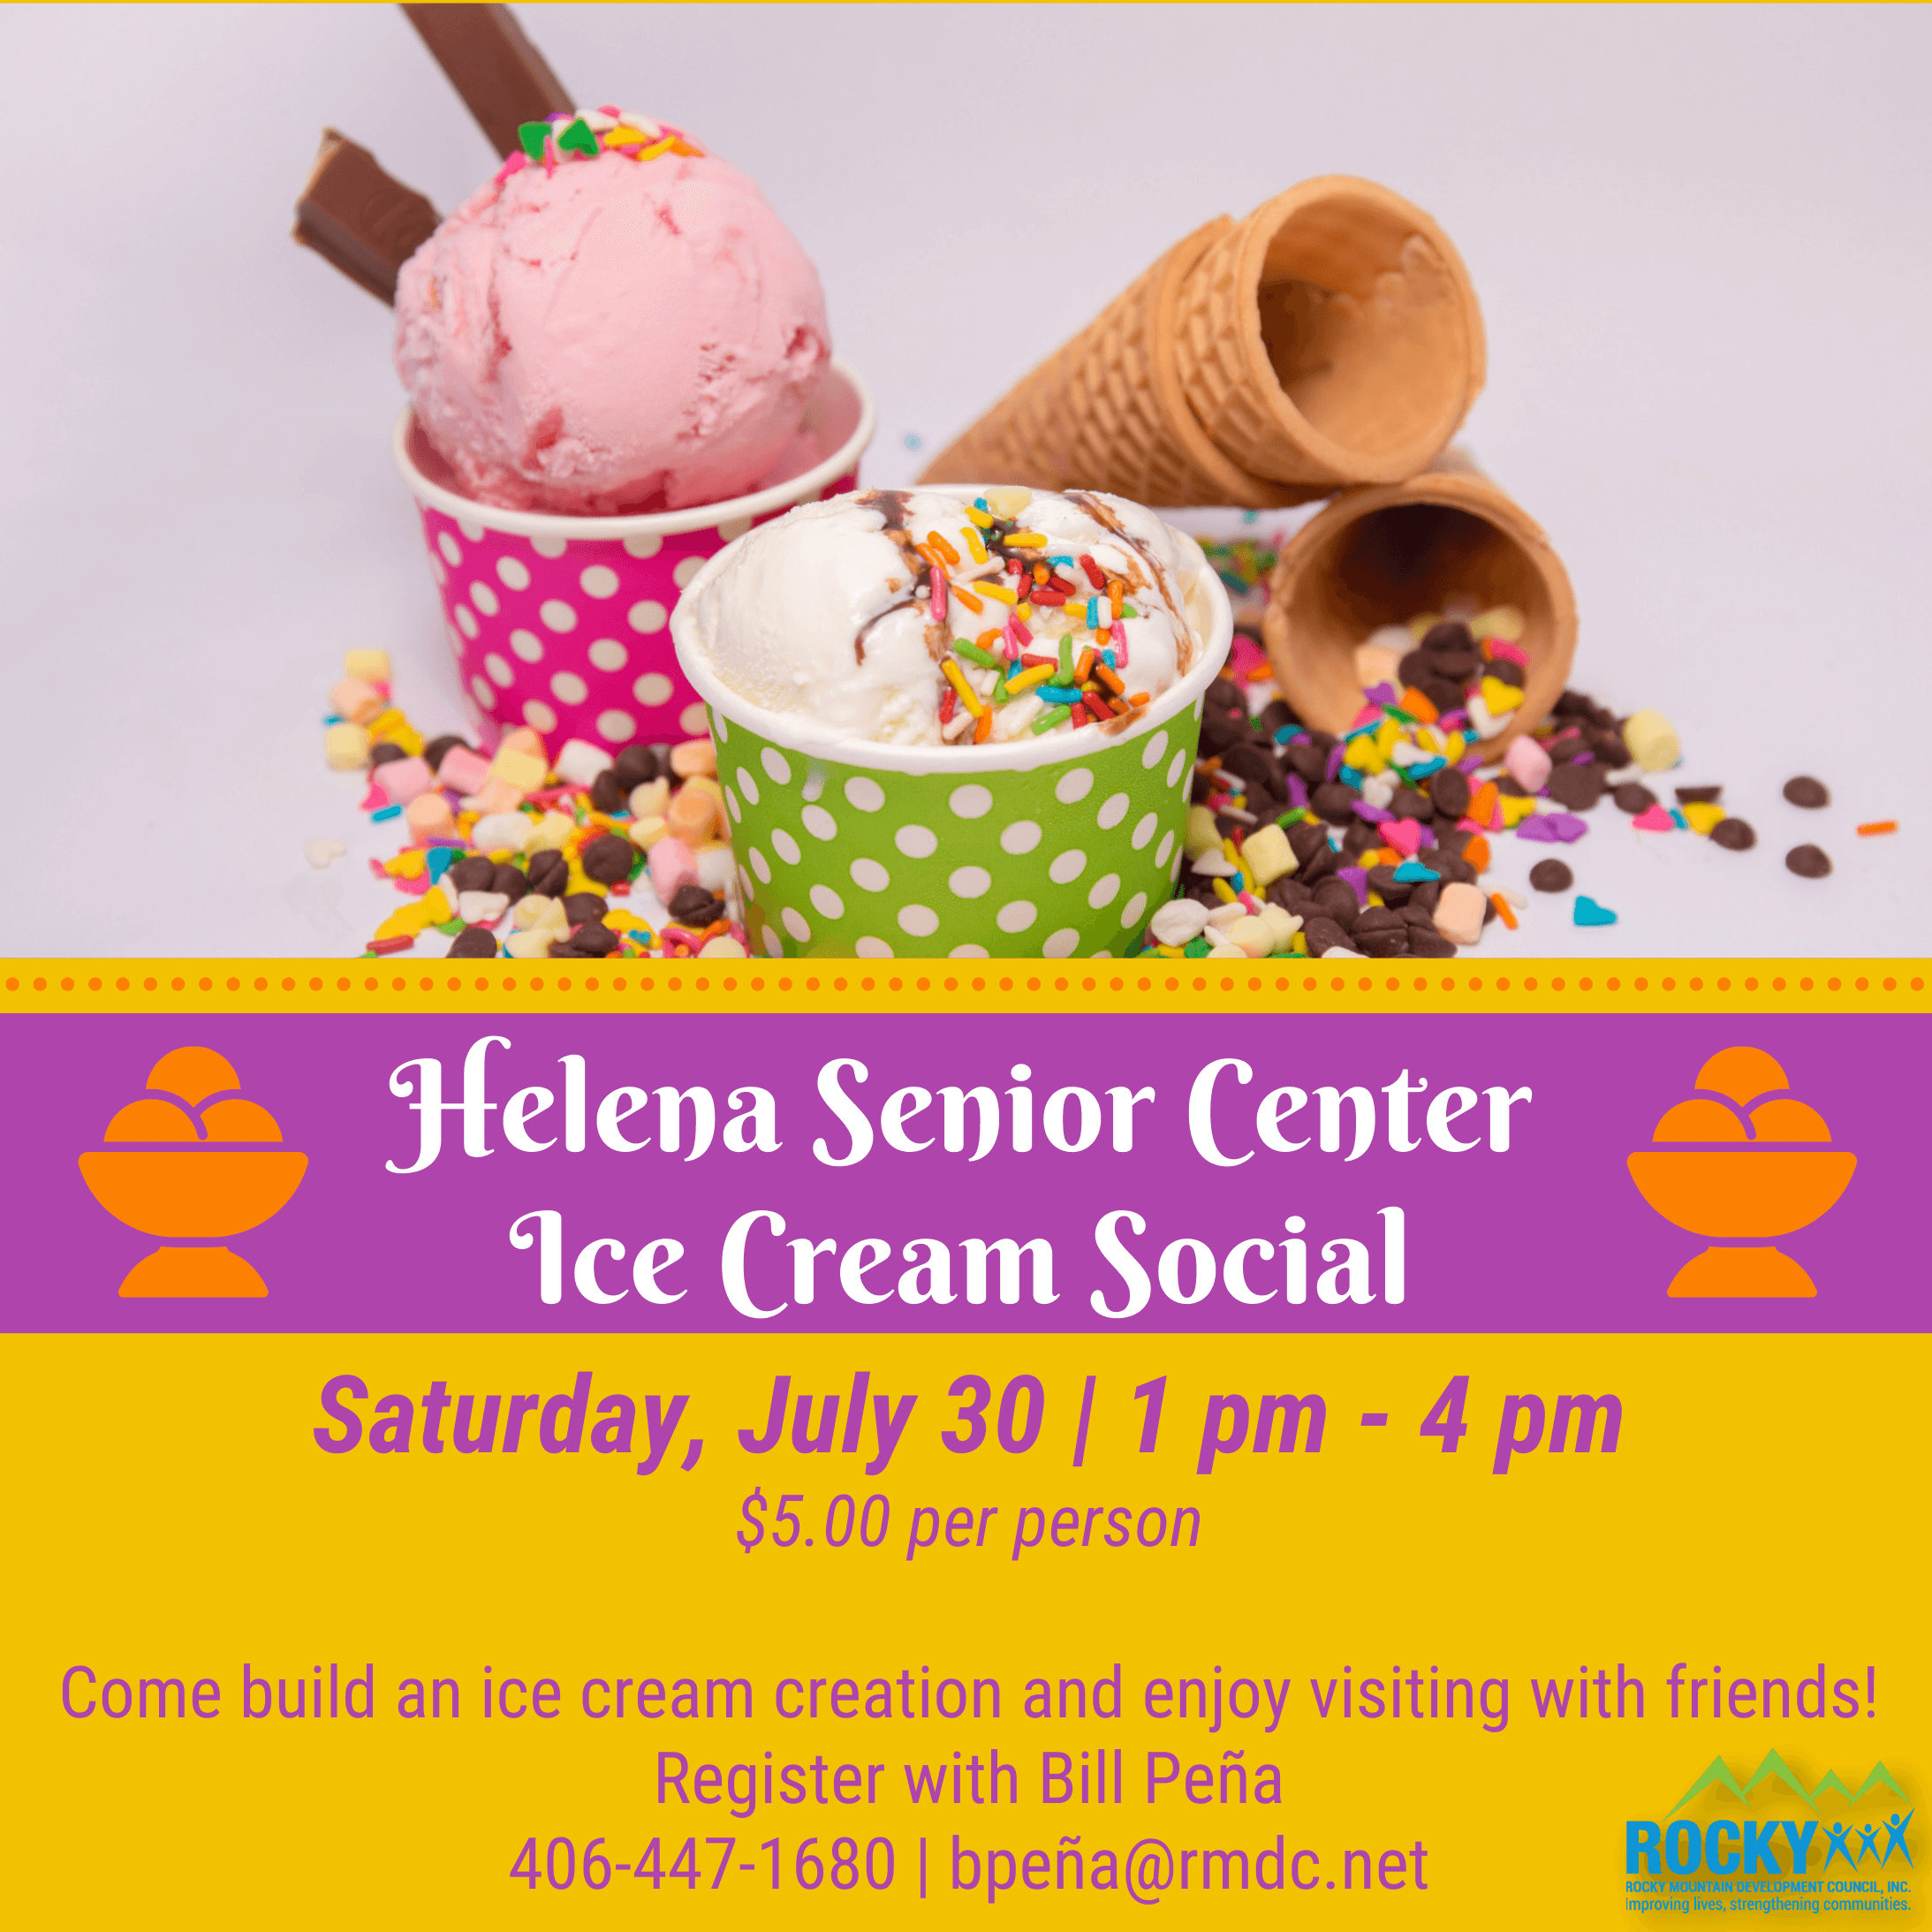 The Senior Advisory of the Helena Senior Center will present an ice cream social on Saturday, June 25 at the Helena Senior Center from 1 pm - 4 pm.